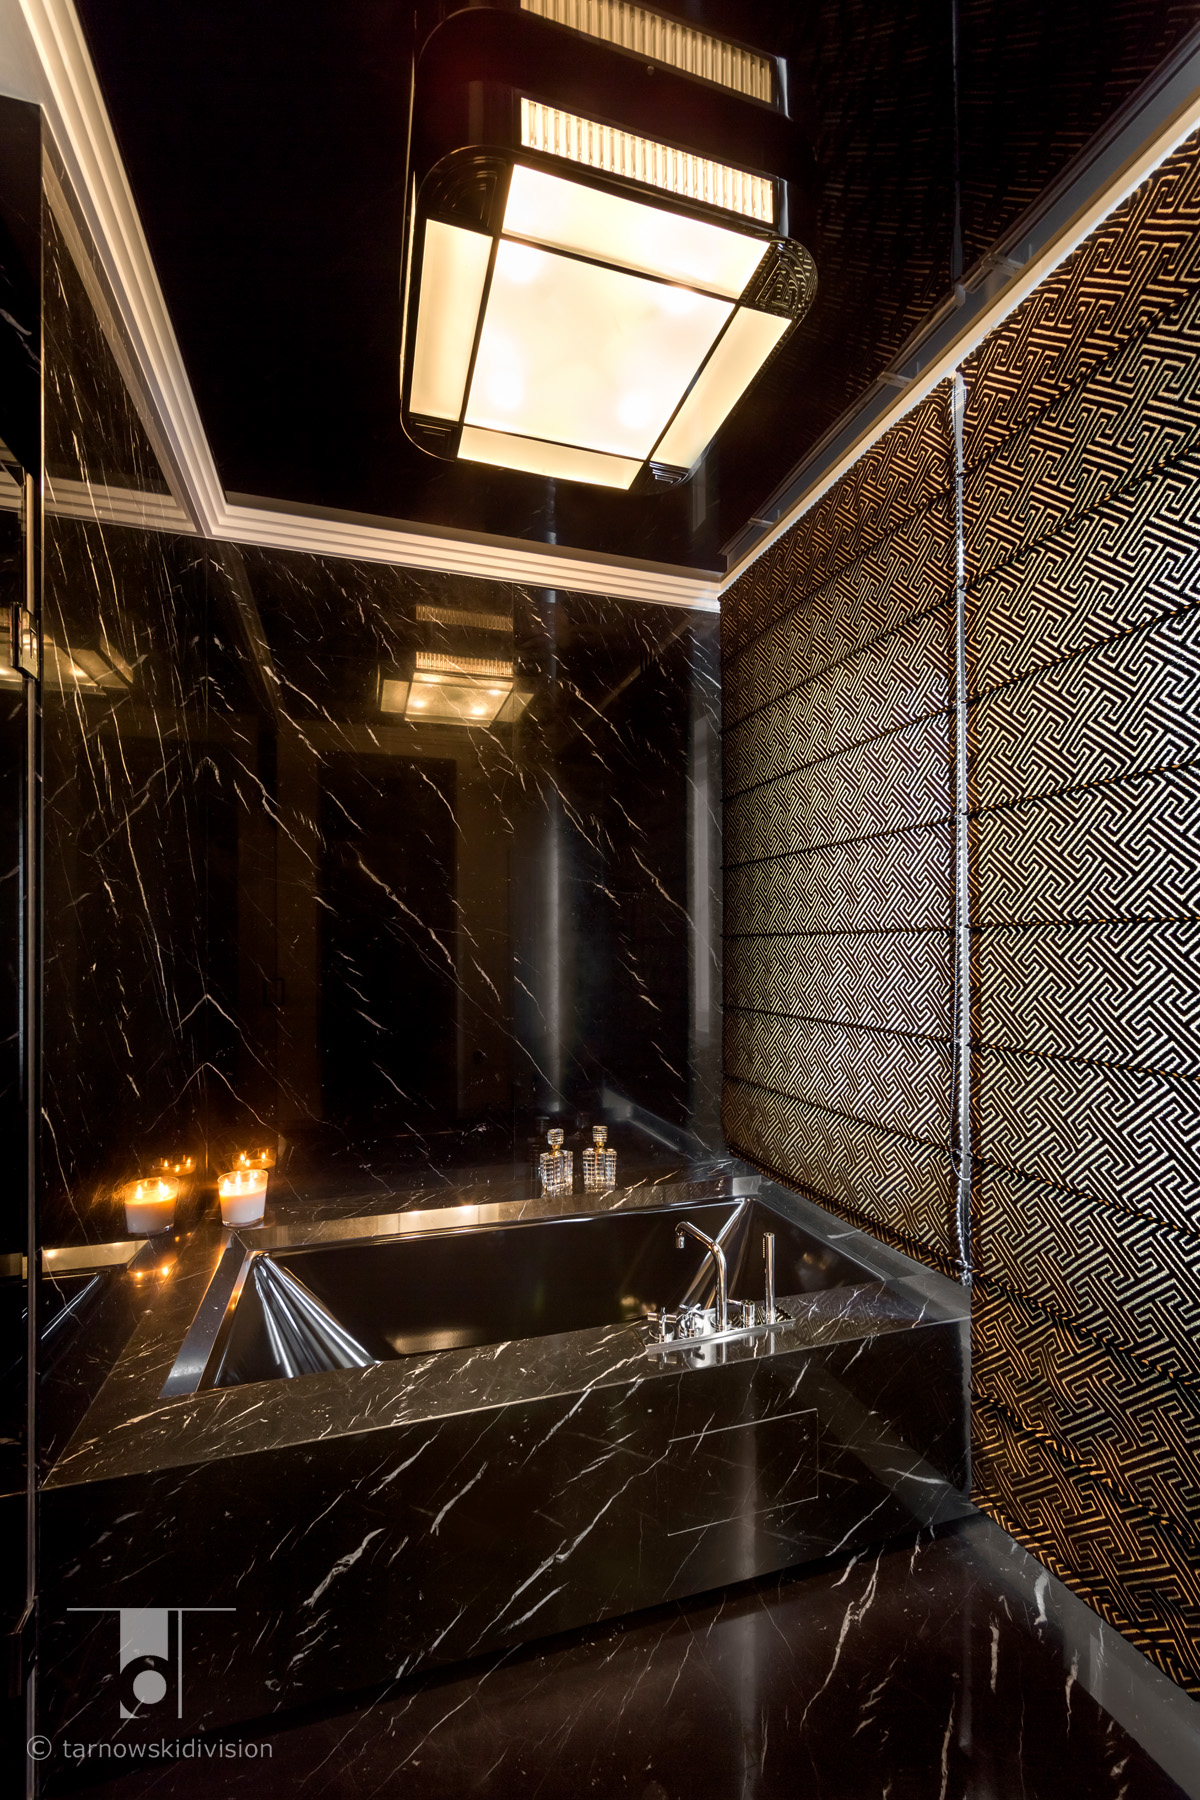 luksusowa łazienka kamienna wanna z marmuru łazienka ekstrawagancka marble bathroom interior_tarnowski division